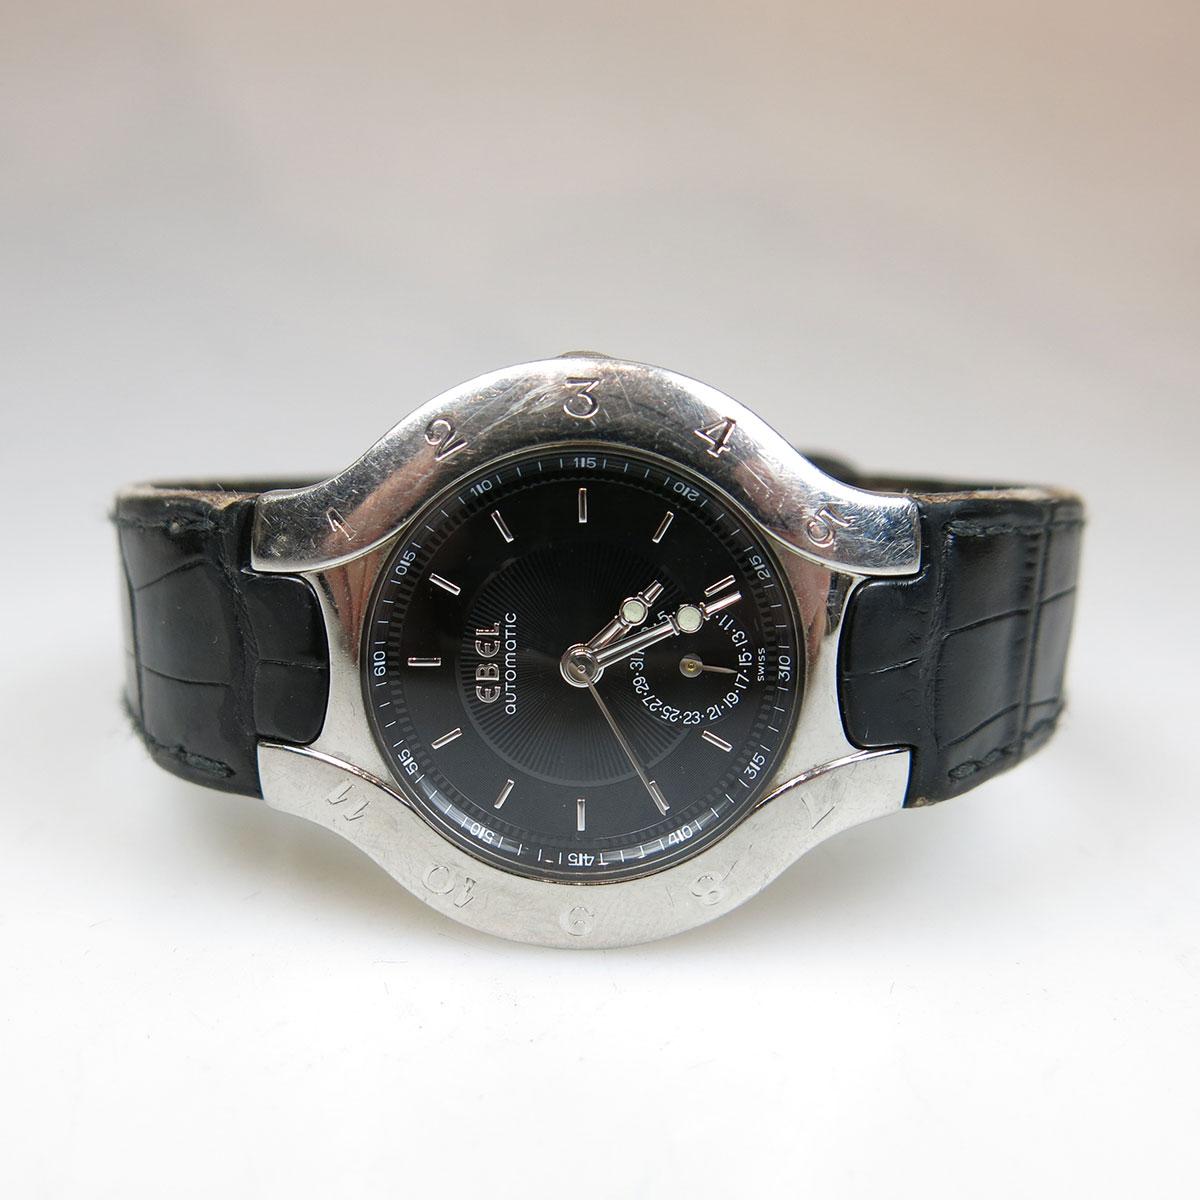 Ebel “Lichine” Wristwatch With Date